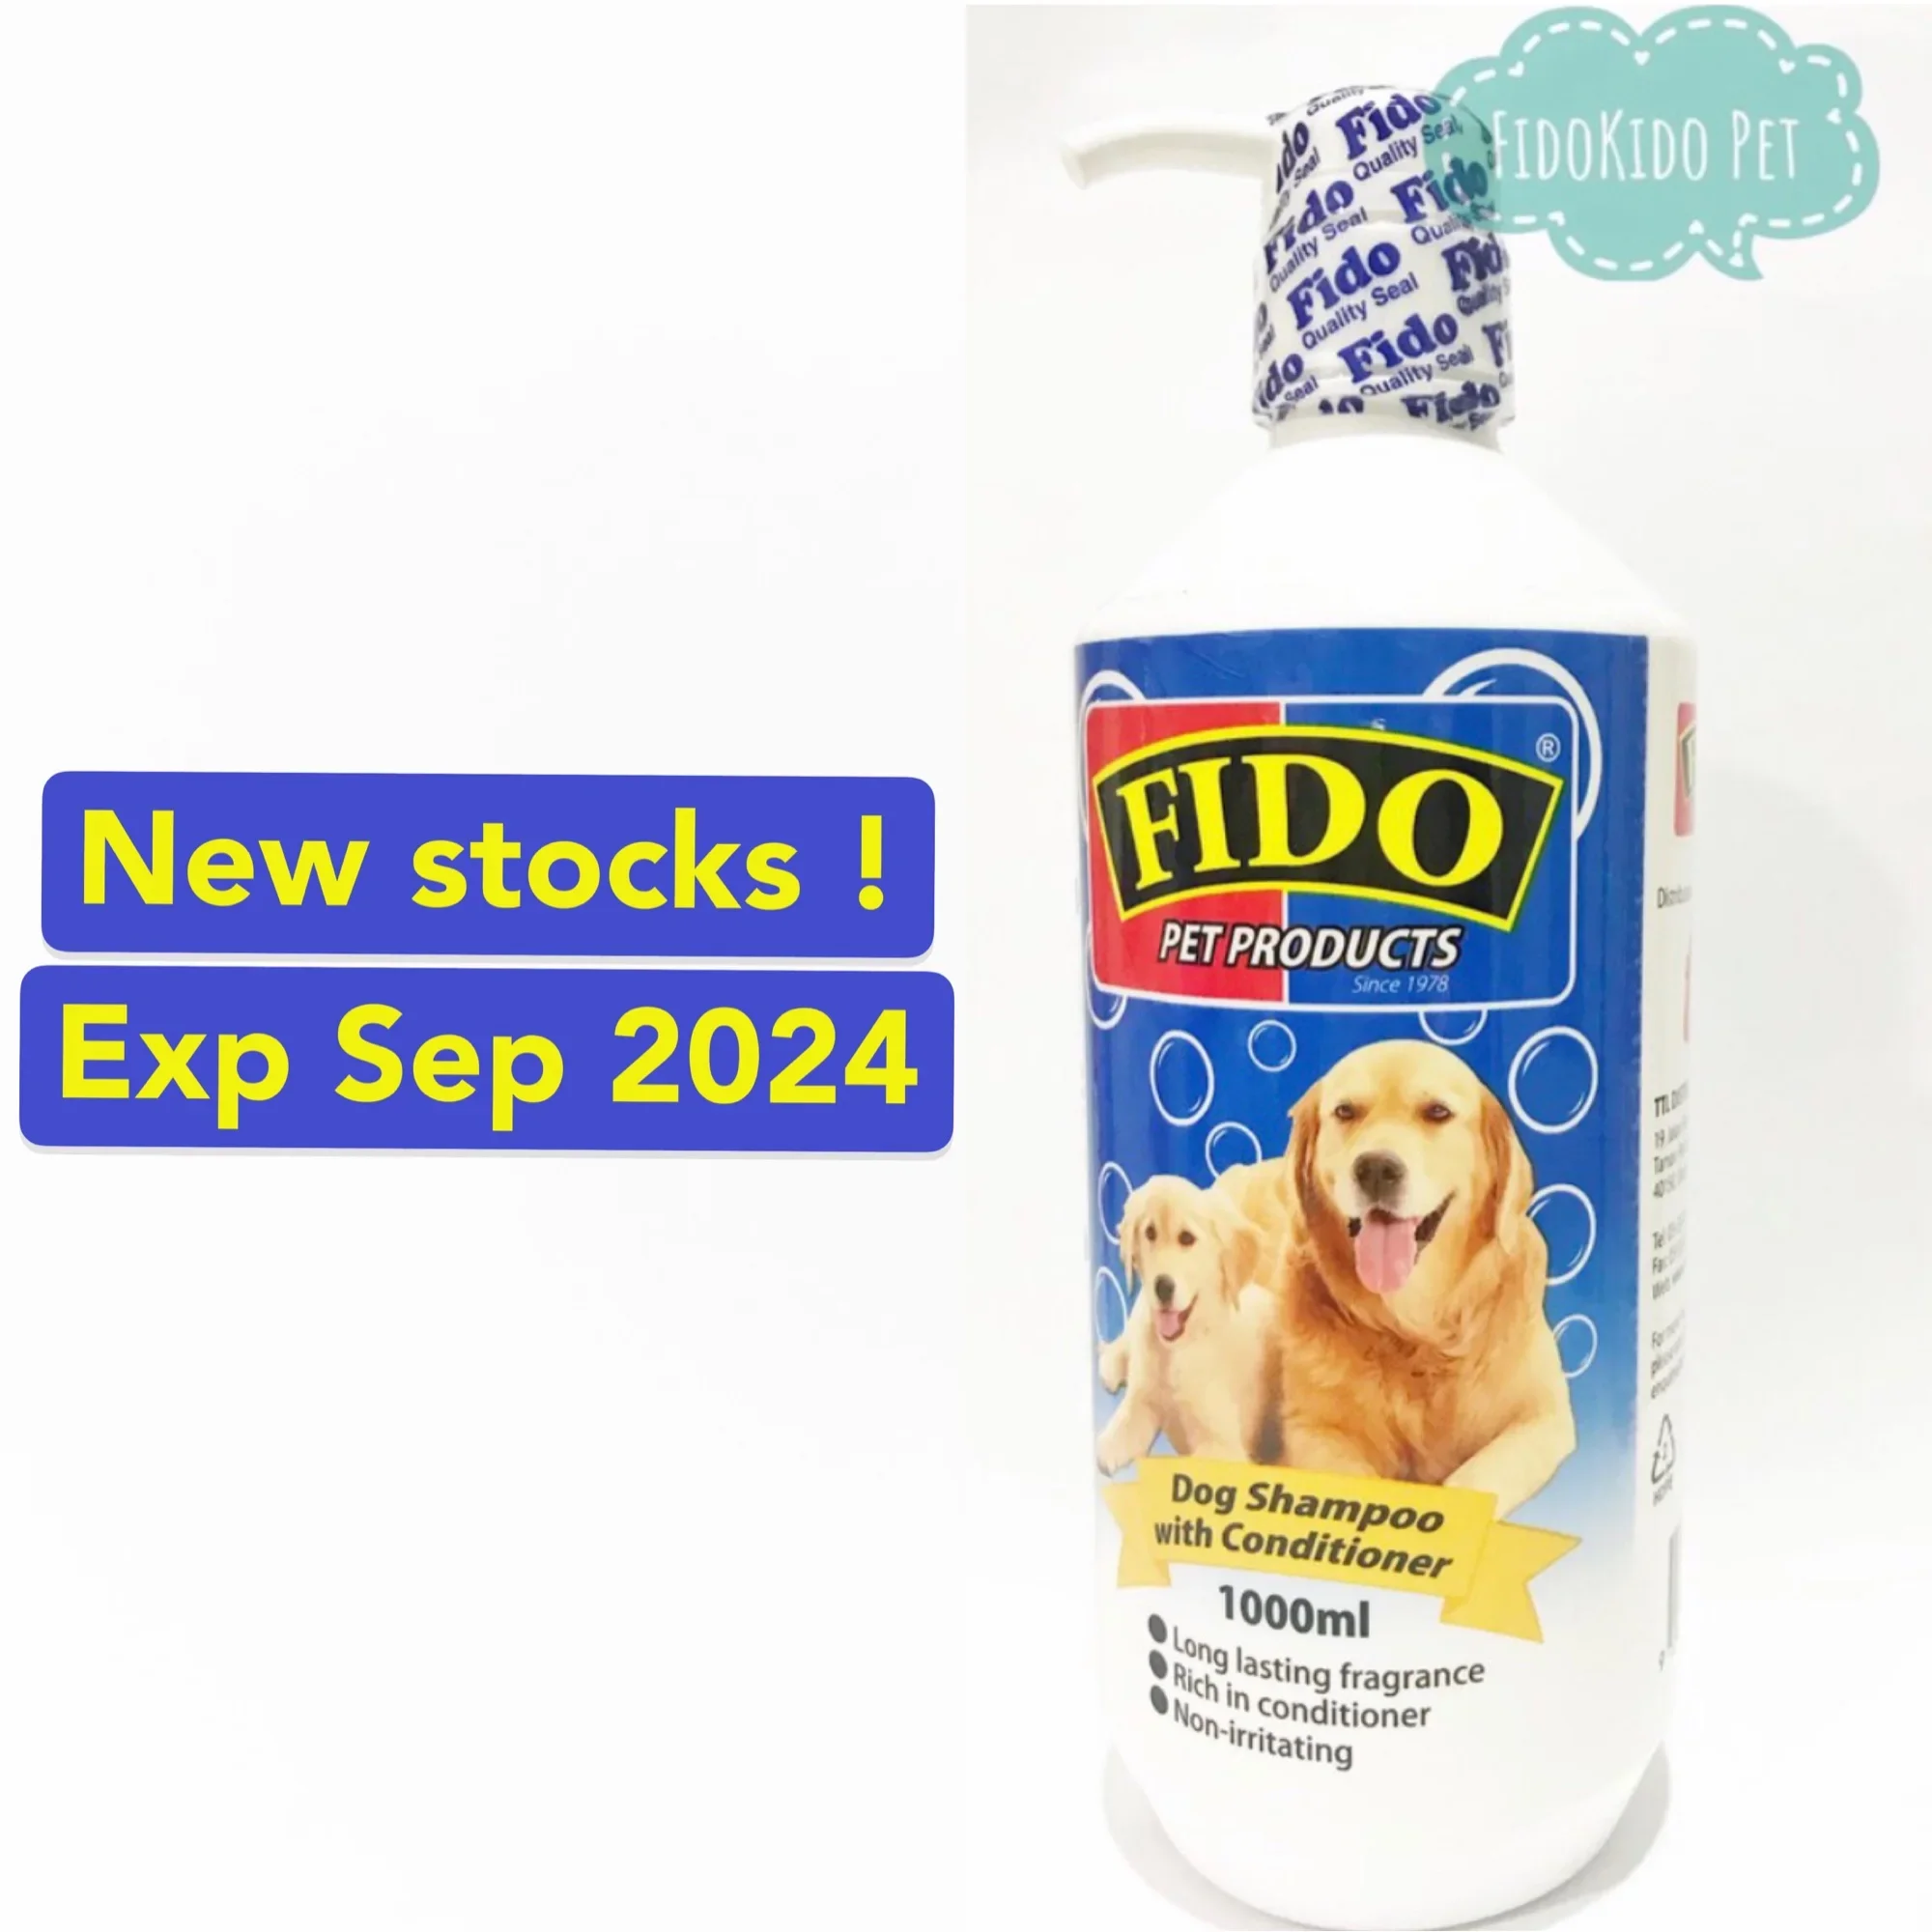 Fido dog shampoo with conditioner - 1000ml